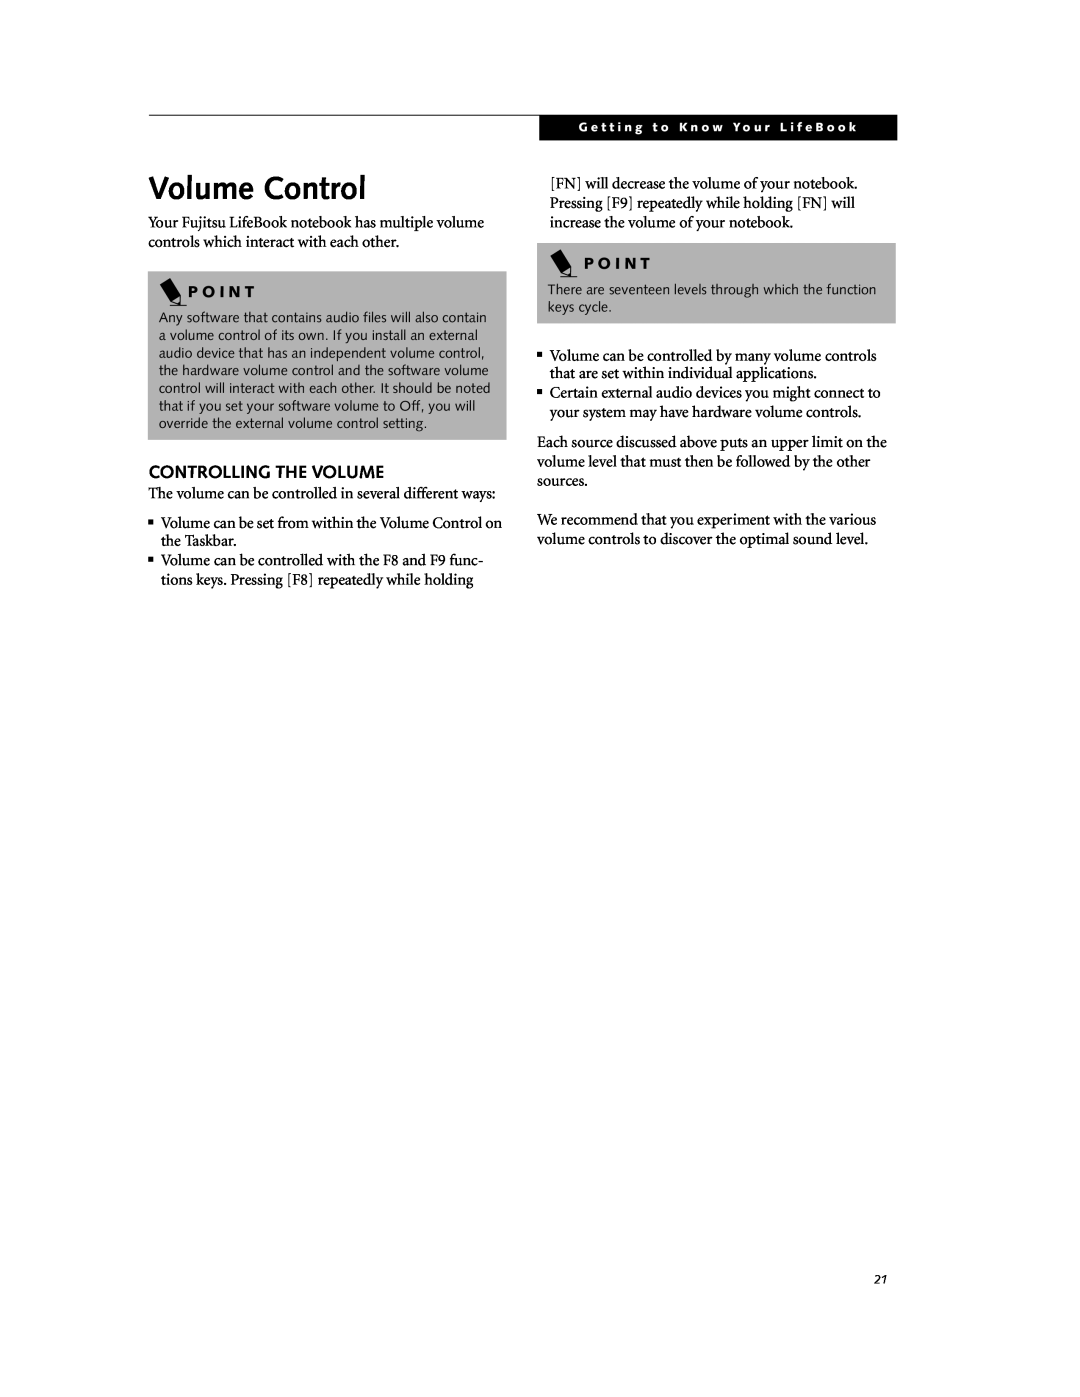 Fujitsu DVD Player manual Volume Control, Controlling The Volume, P O I N T 